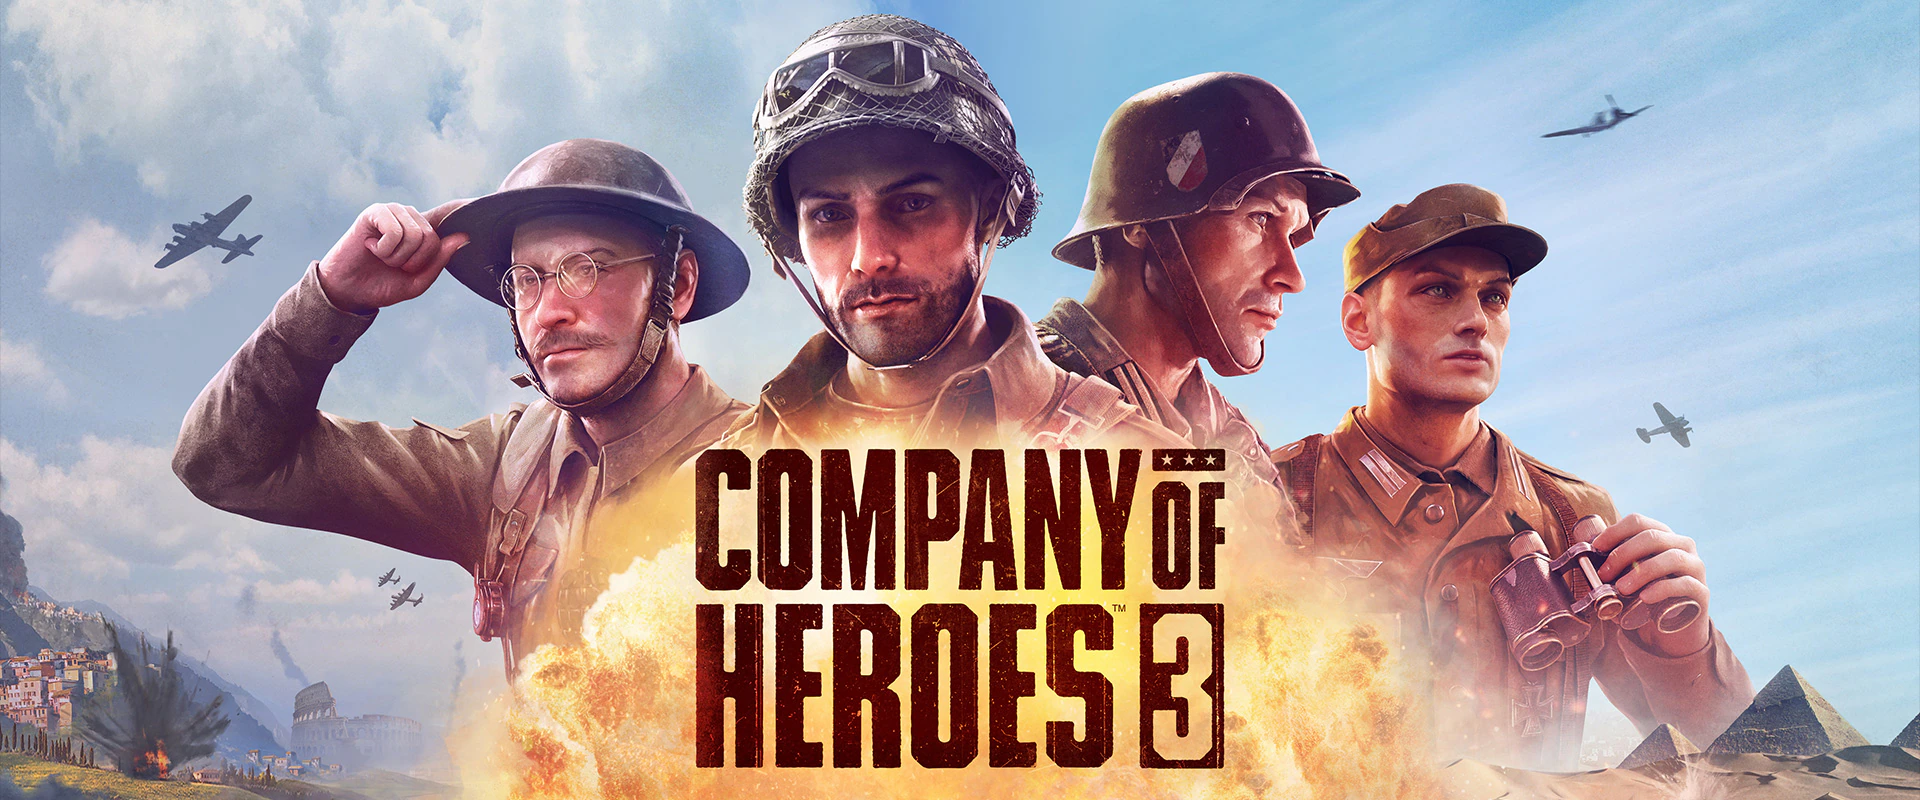 company of heroes 3 15